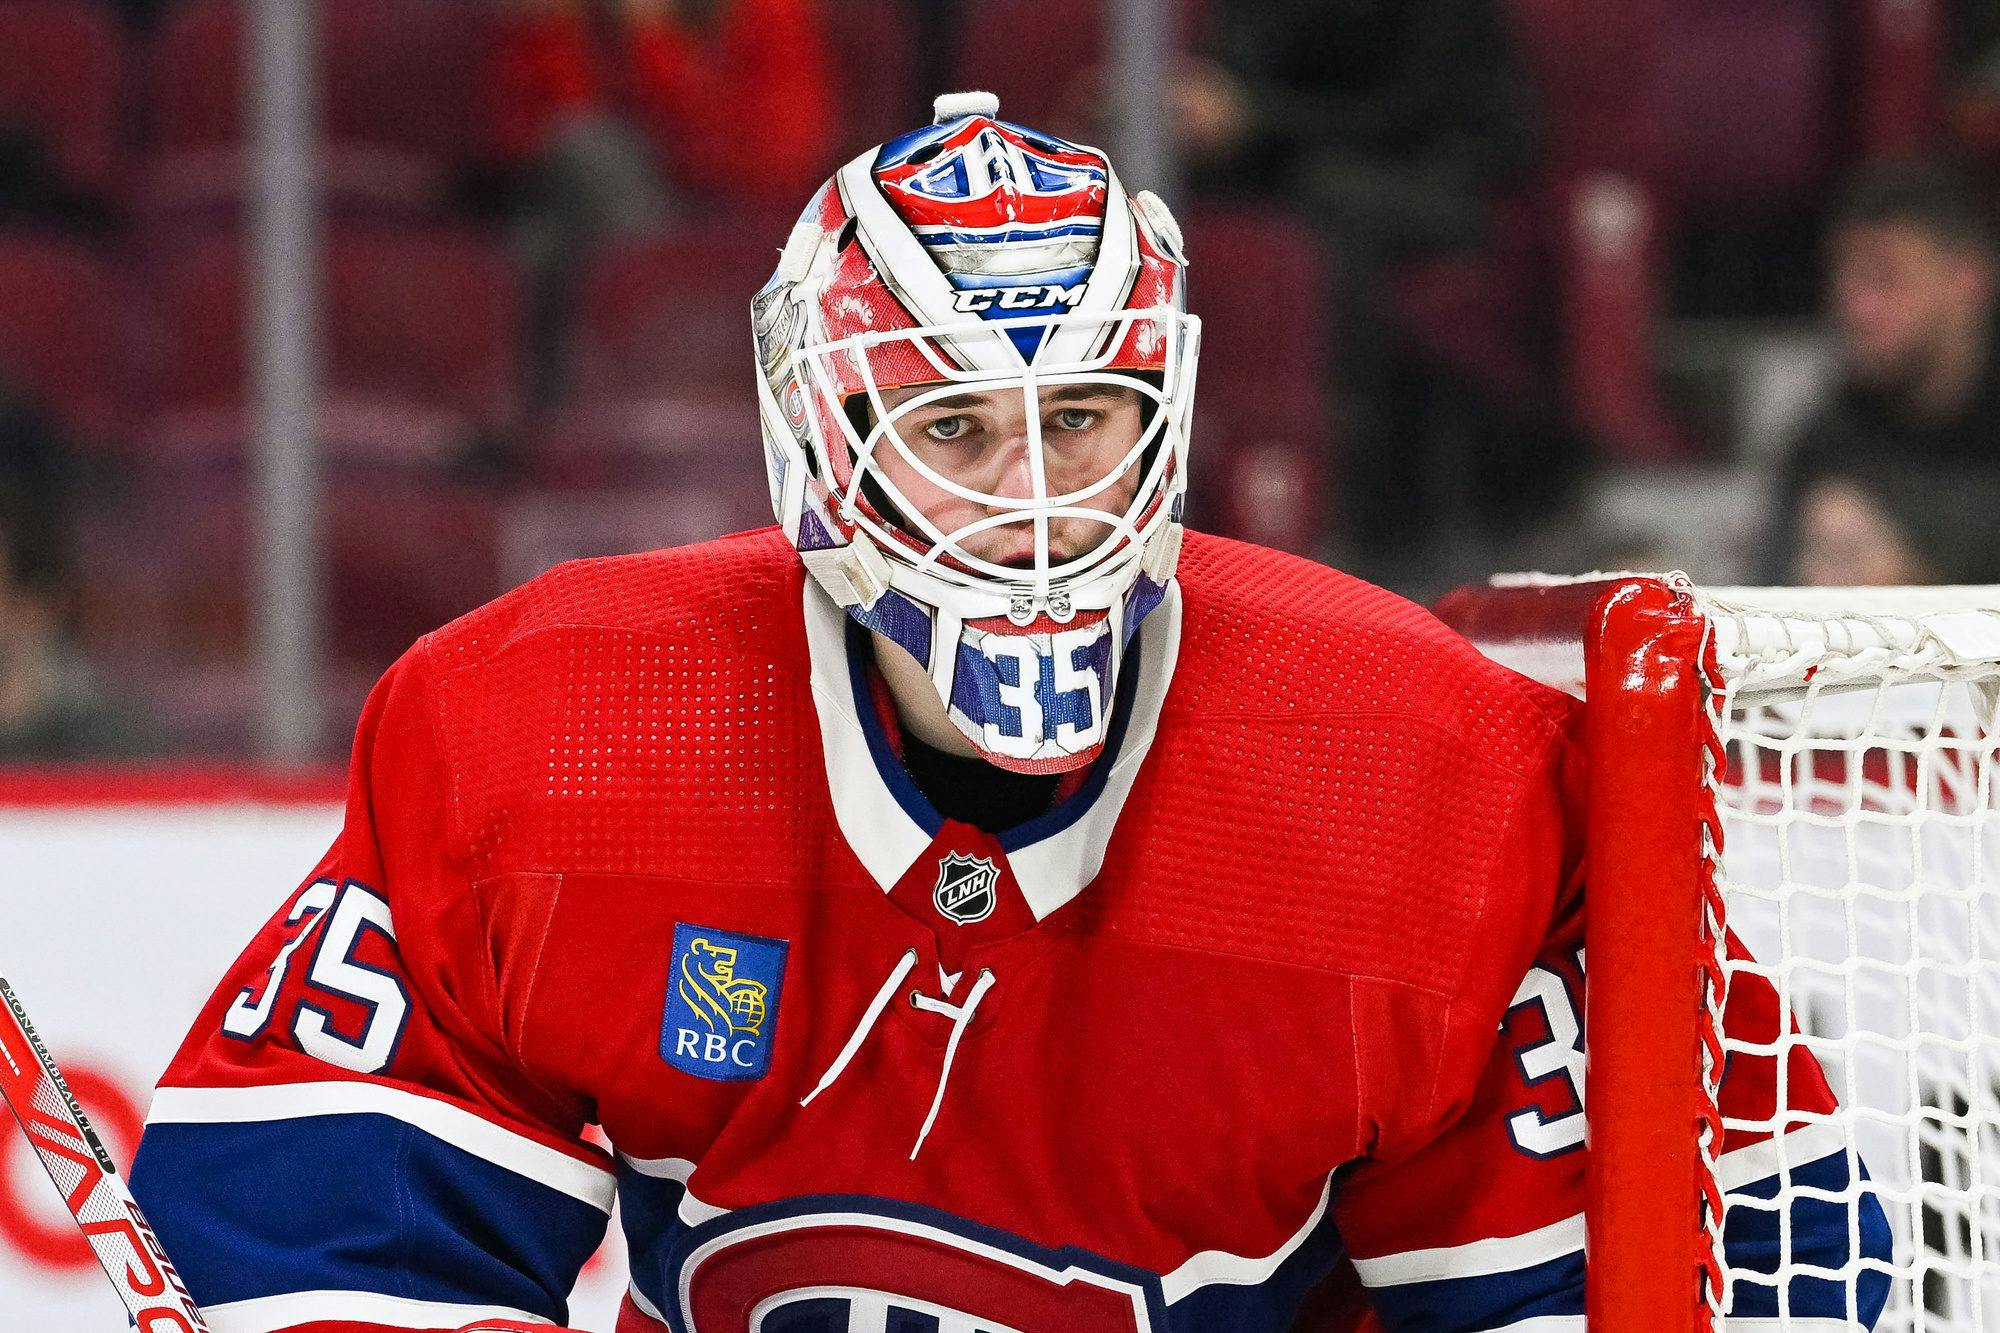 Montreal Canadiens goaltender Samuel Montembeault deserves more attention